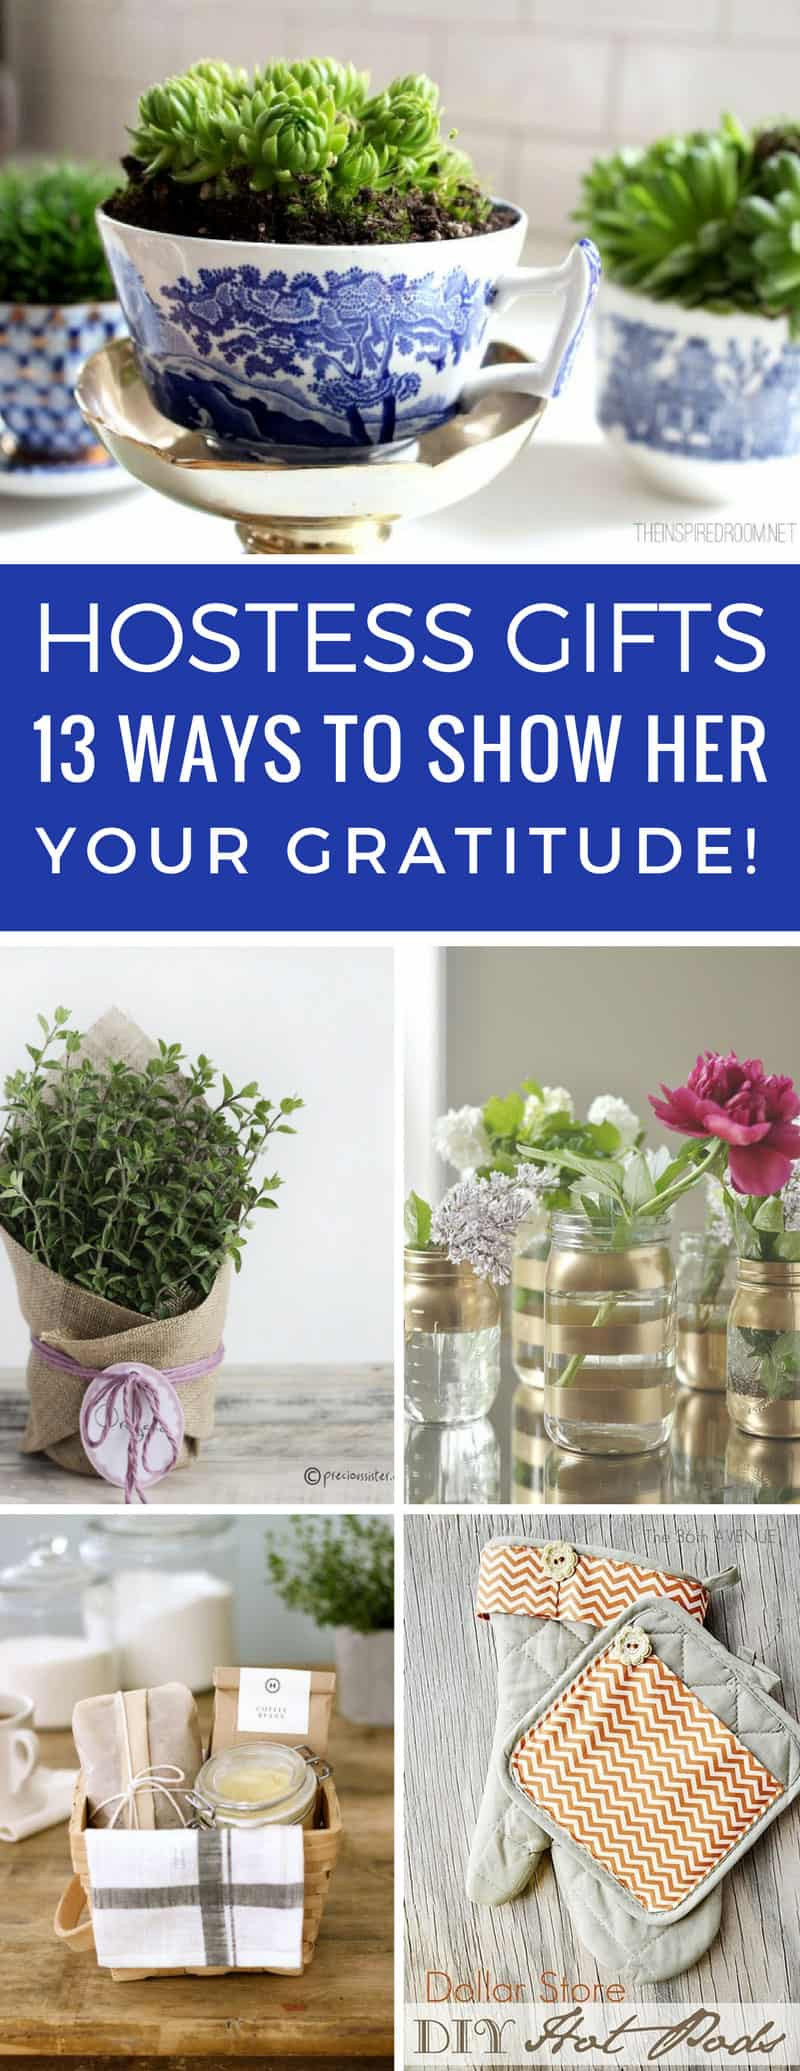 Thanksgiving Hostess Gift Ideas Homemade
 13 DIY Hostess Gift Ideas Homemade Gifts that Will Get